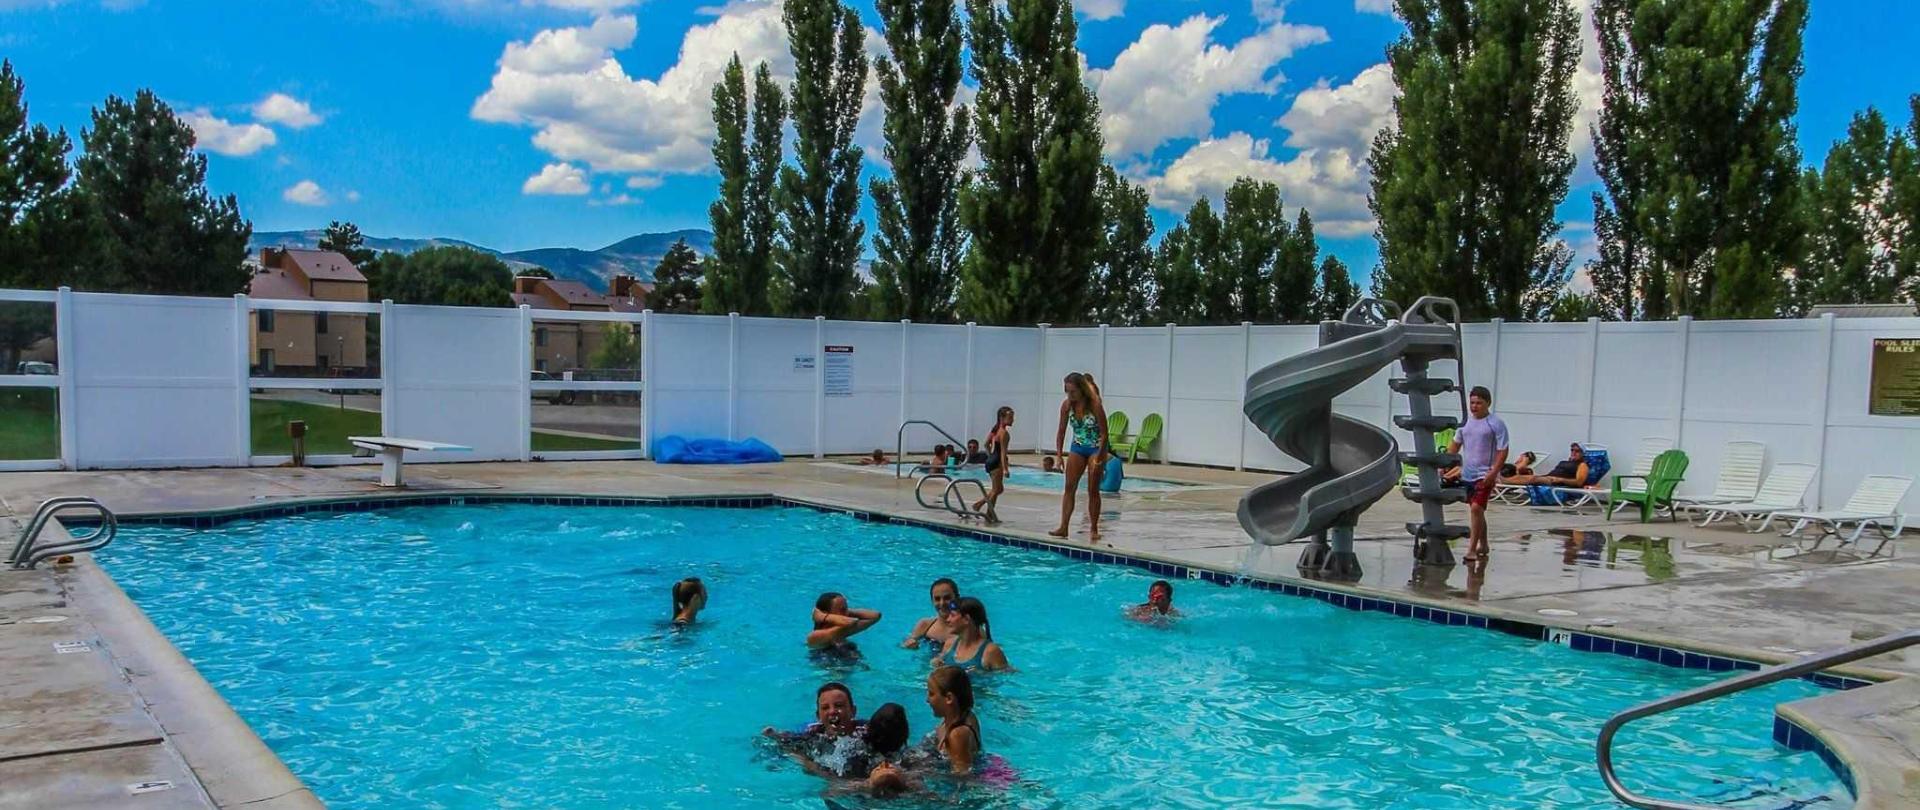 Multi Resorts at Bear Lake - Garden City - USA